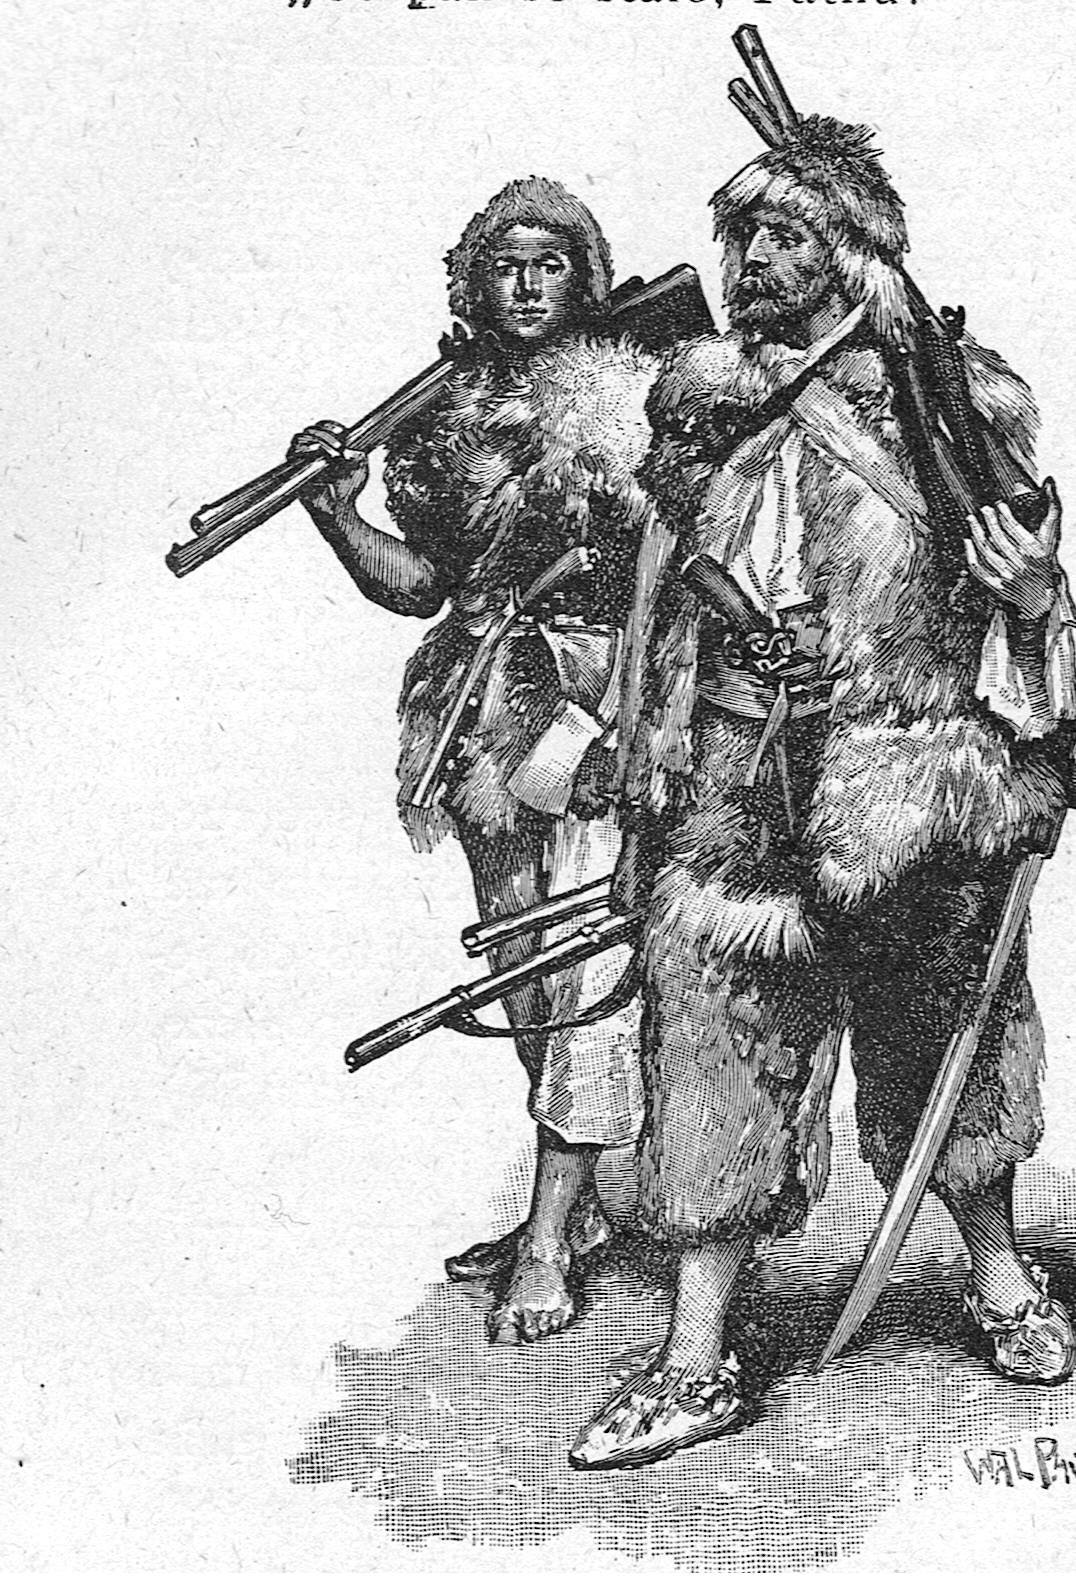 Друг робинзона крузо. Робинзон Крузо и пятница иллюстрации. Слуга Робинзона Крузо. Робинзон Крузо 1946. Робинзон Крузо на острове с пятницей.